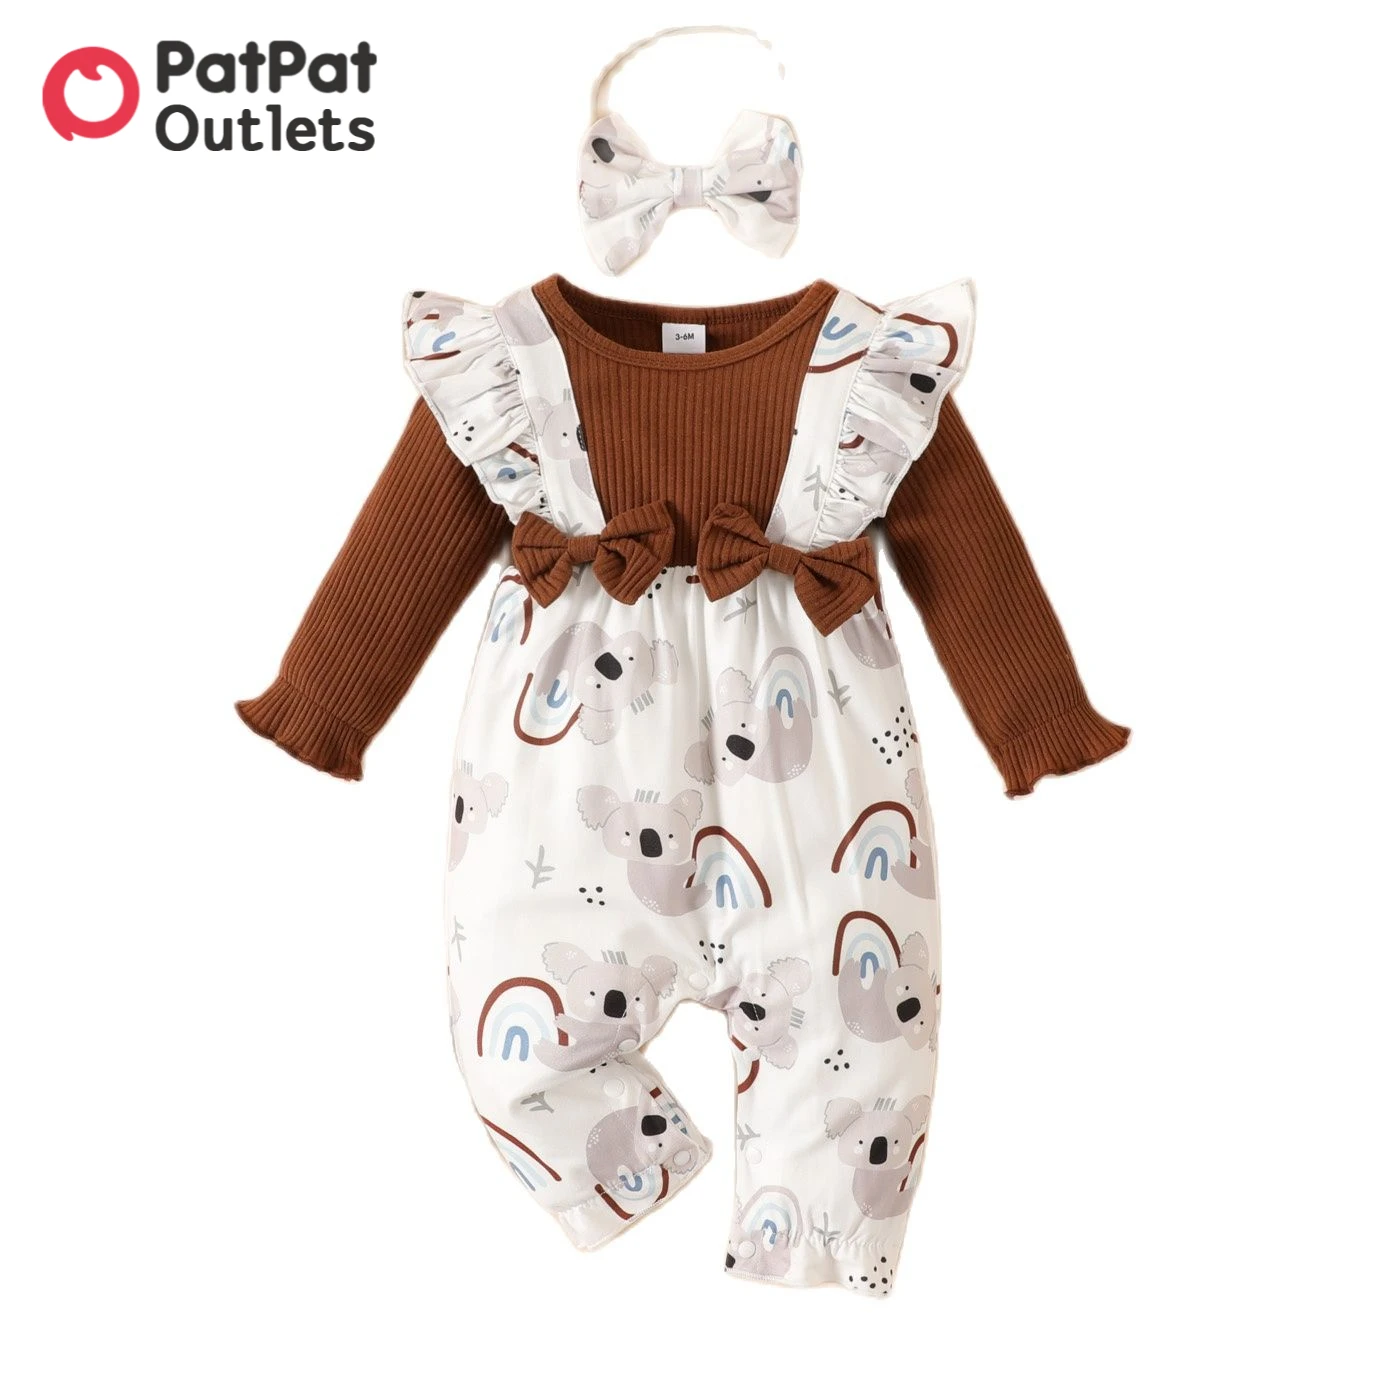 

PatPat Overalls Newborn Baby Girl Clothes New Born Jumpsuit Romper Infant Bodysuit 2pcs 95% Cotton Rib Knit Koala Headband Set